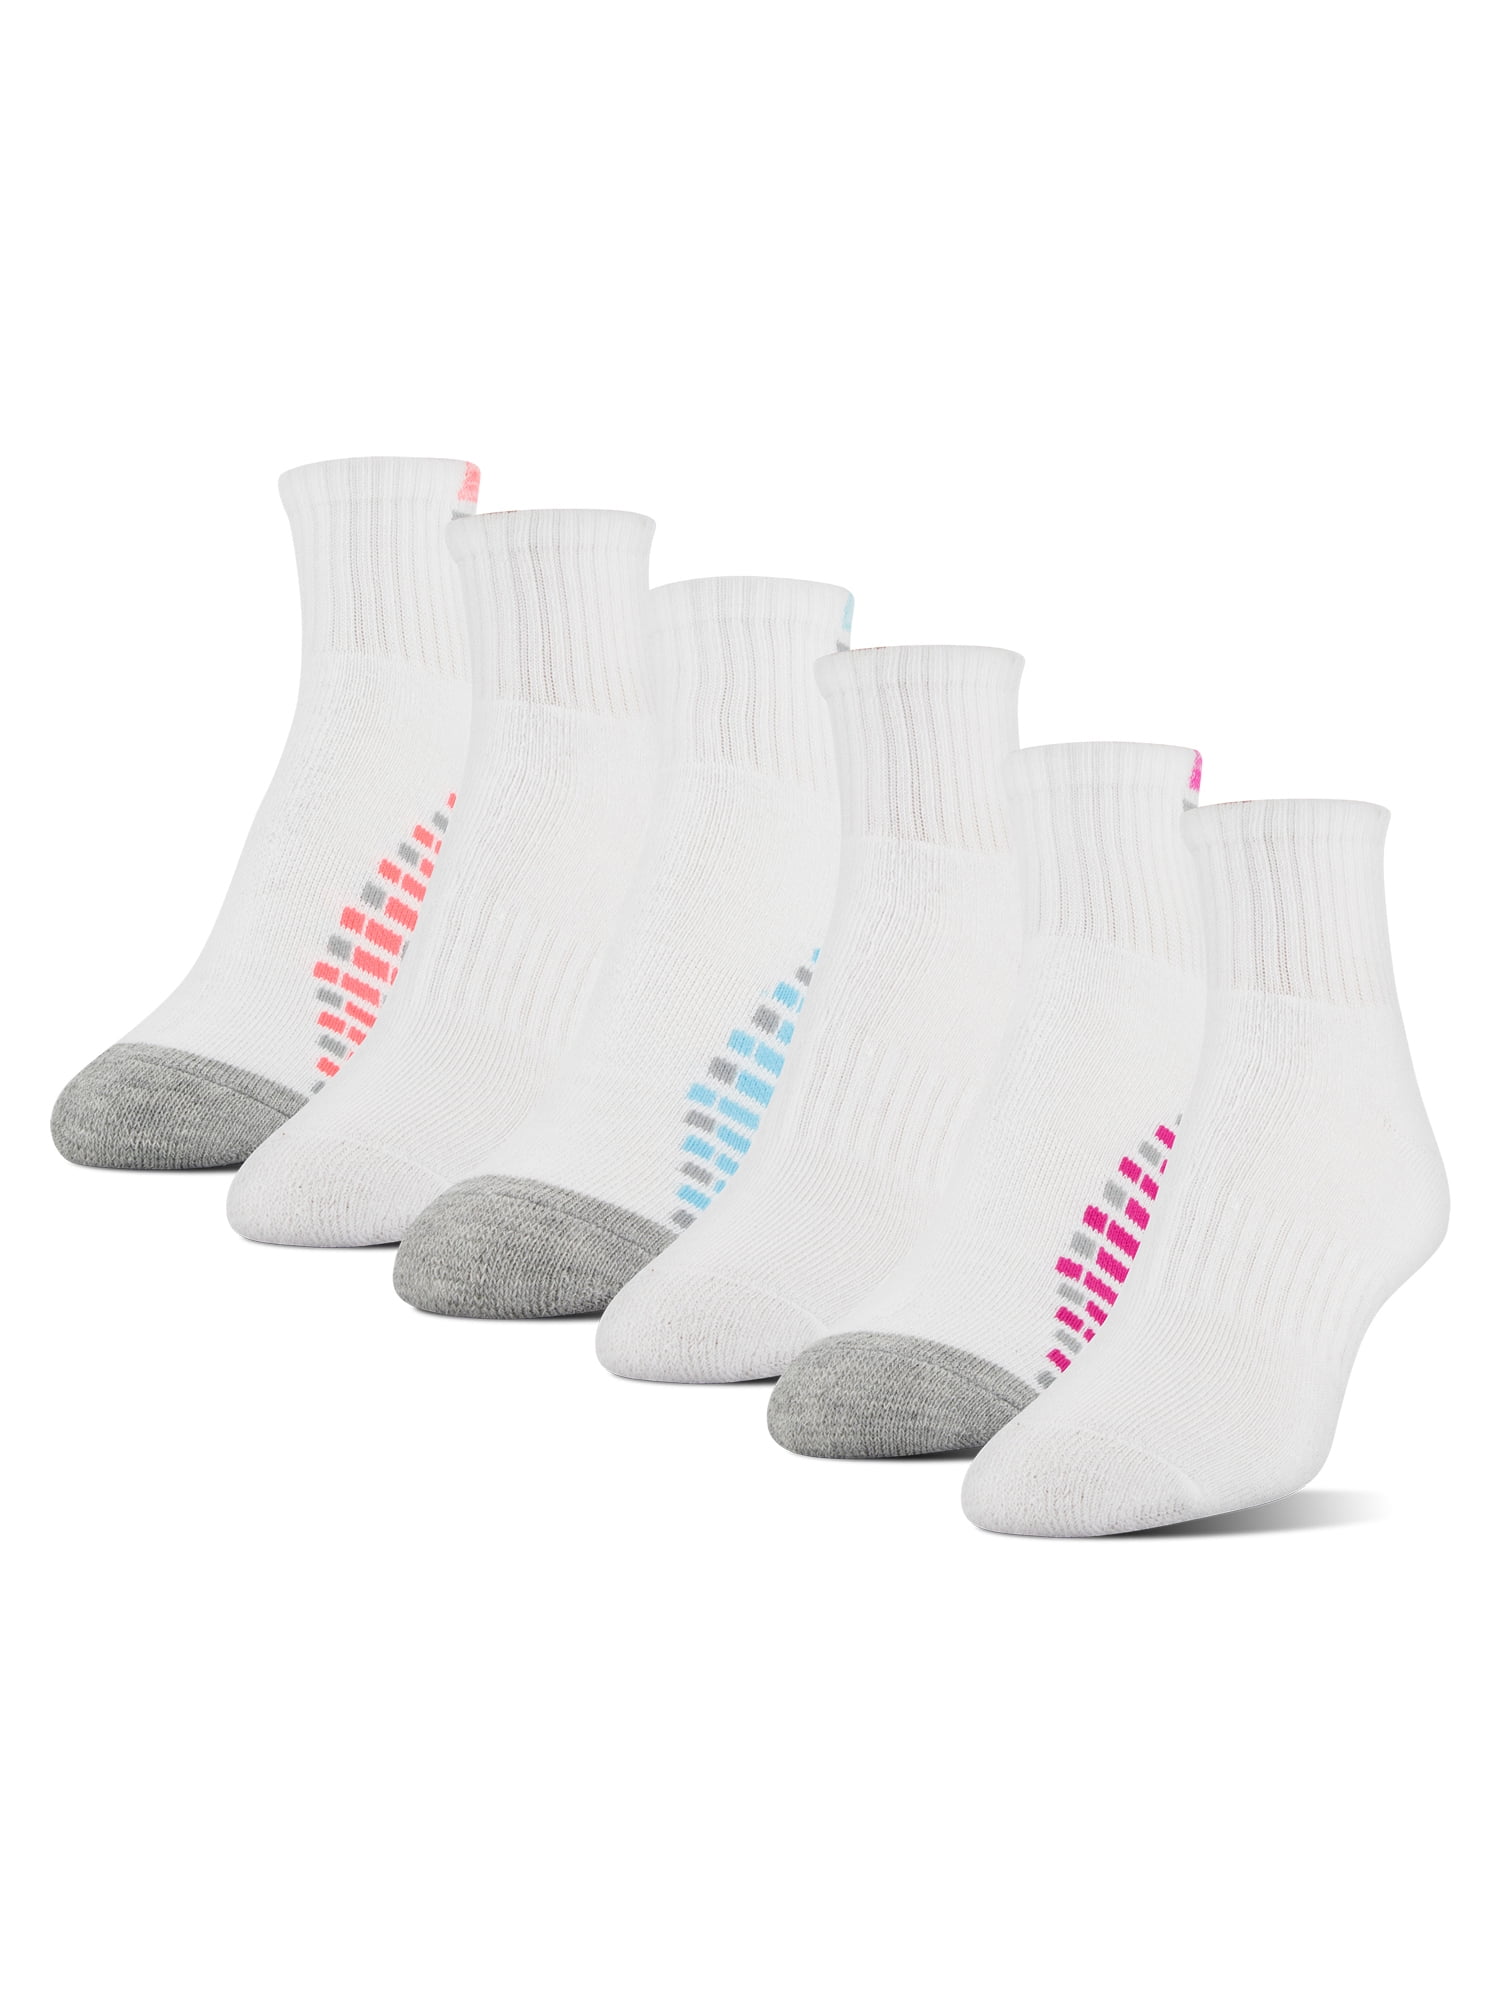 Athletic Works Women's Maxcushion Ankle Socks, 6 Pairs - Walmart.com